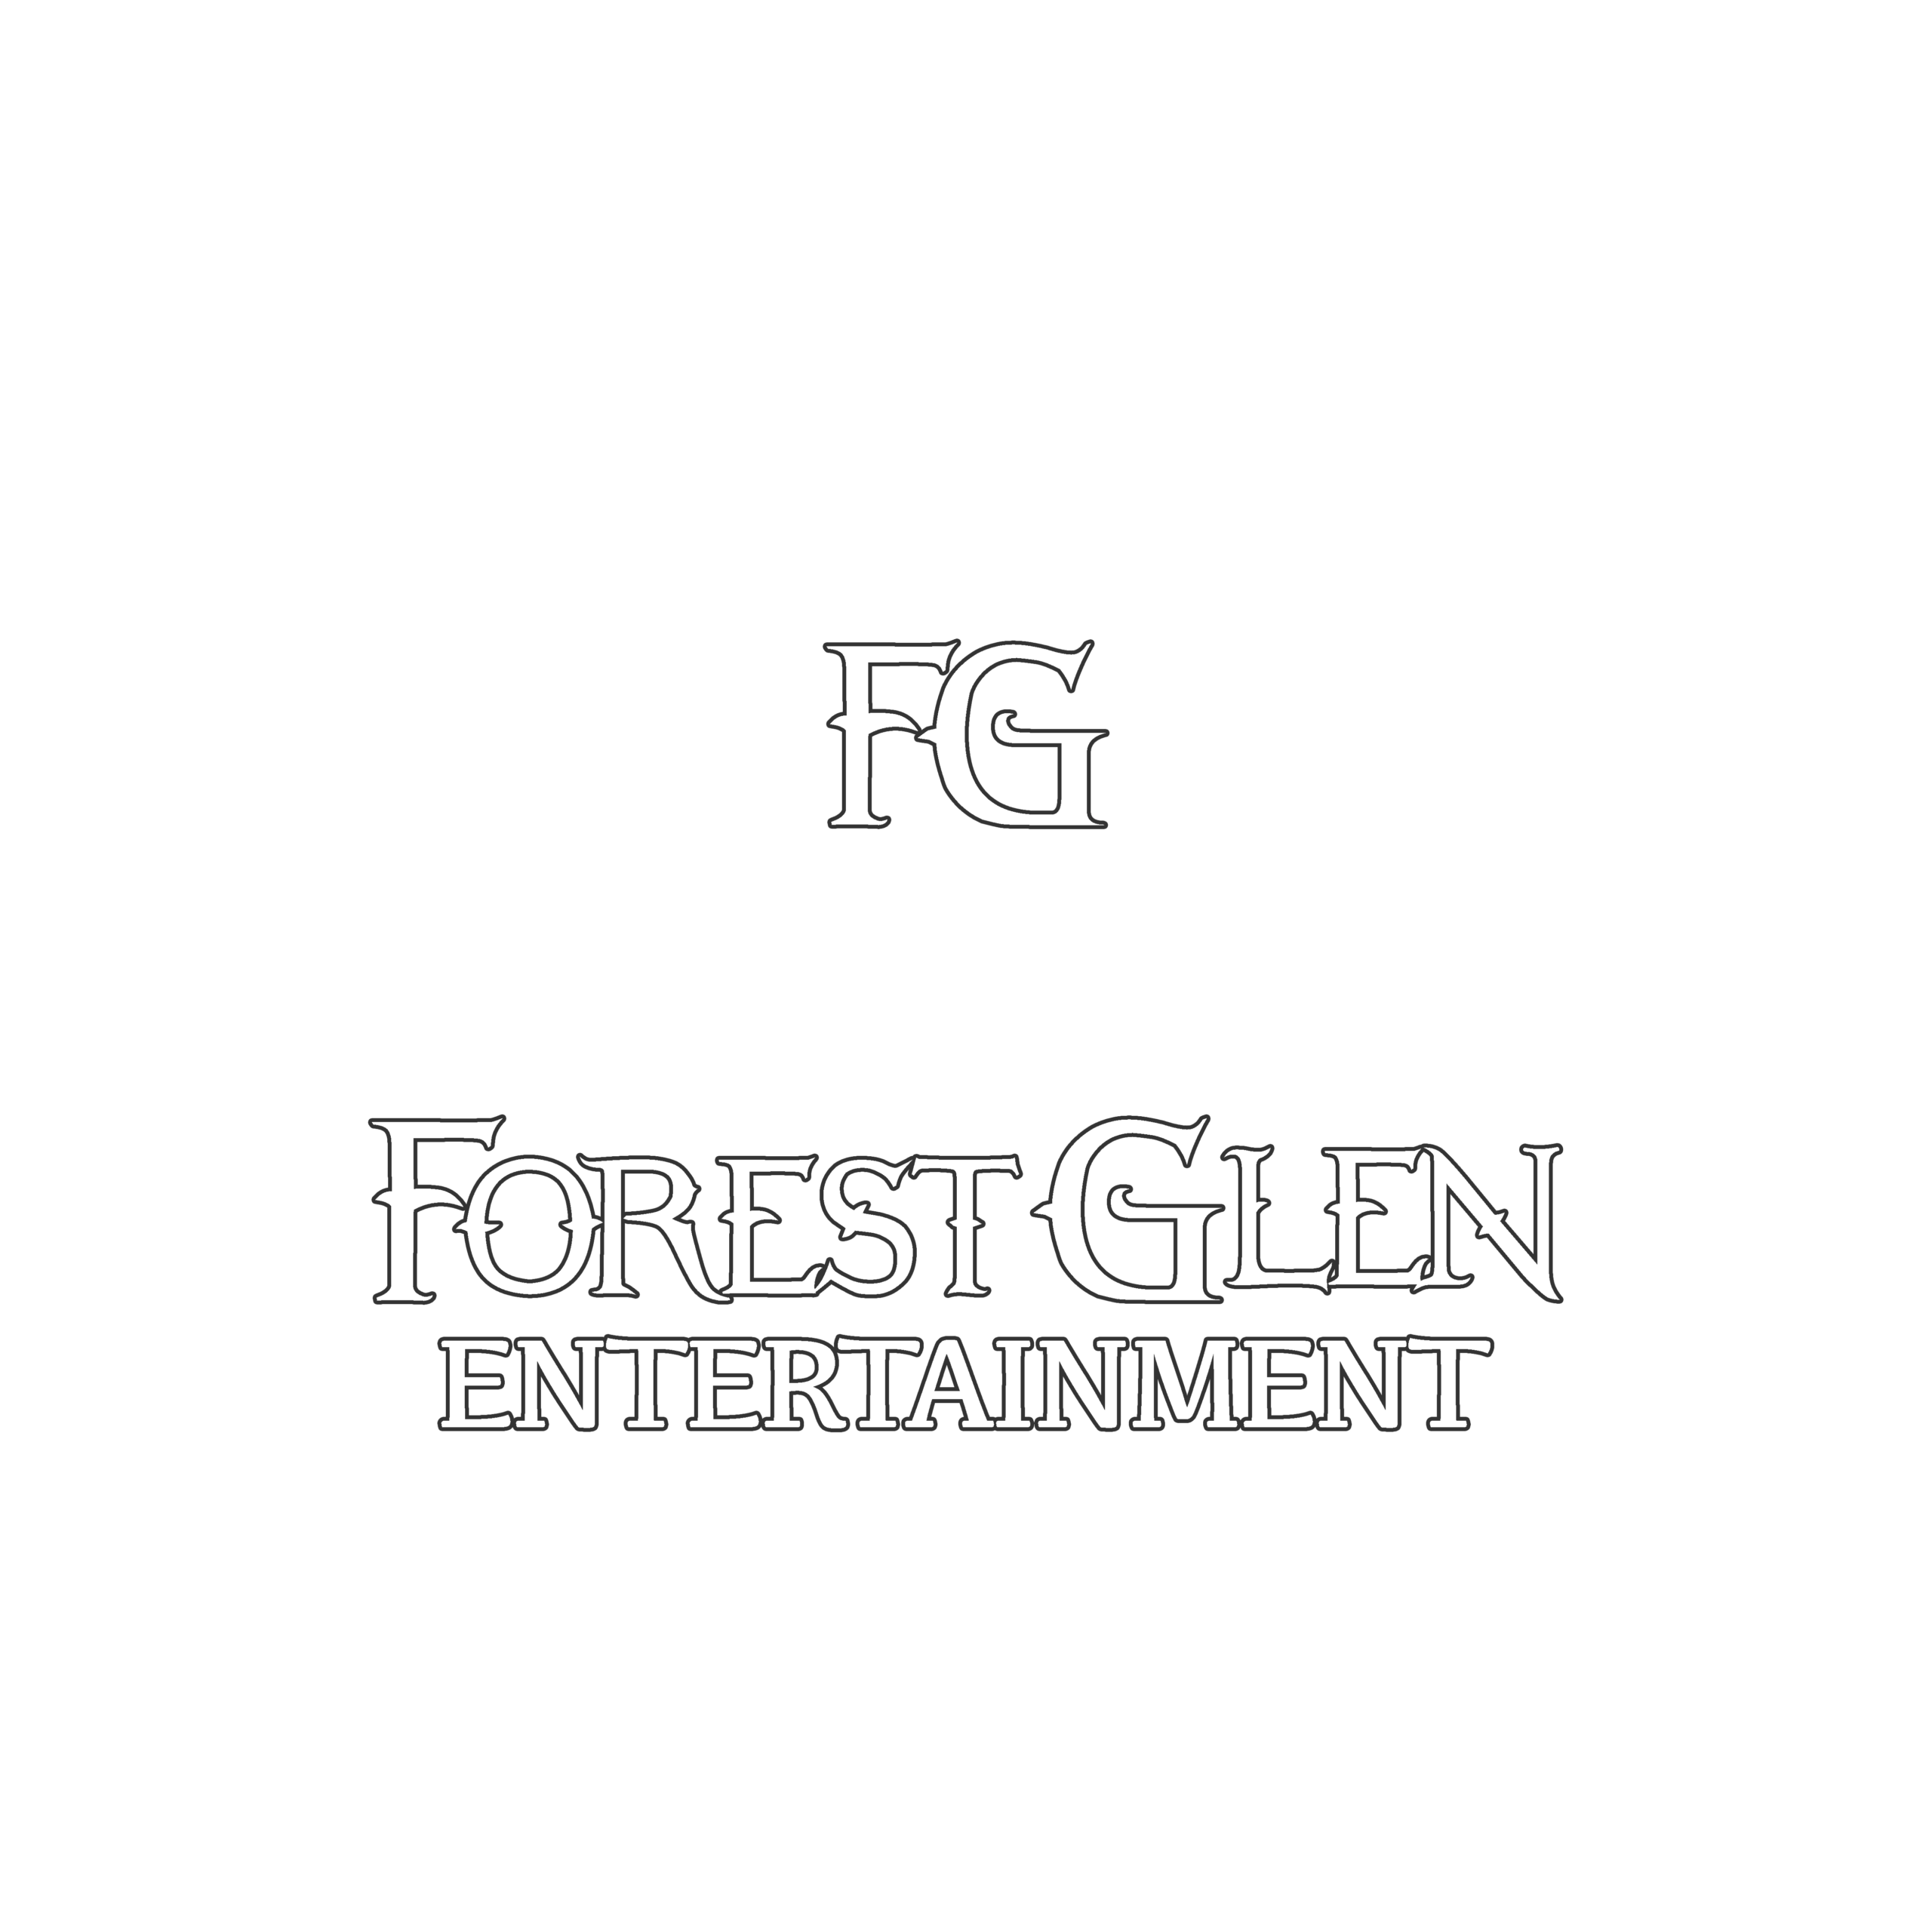 Forest Glen Entertainment